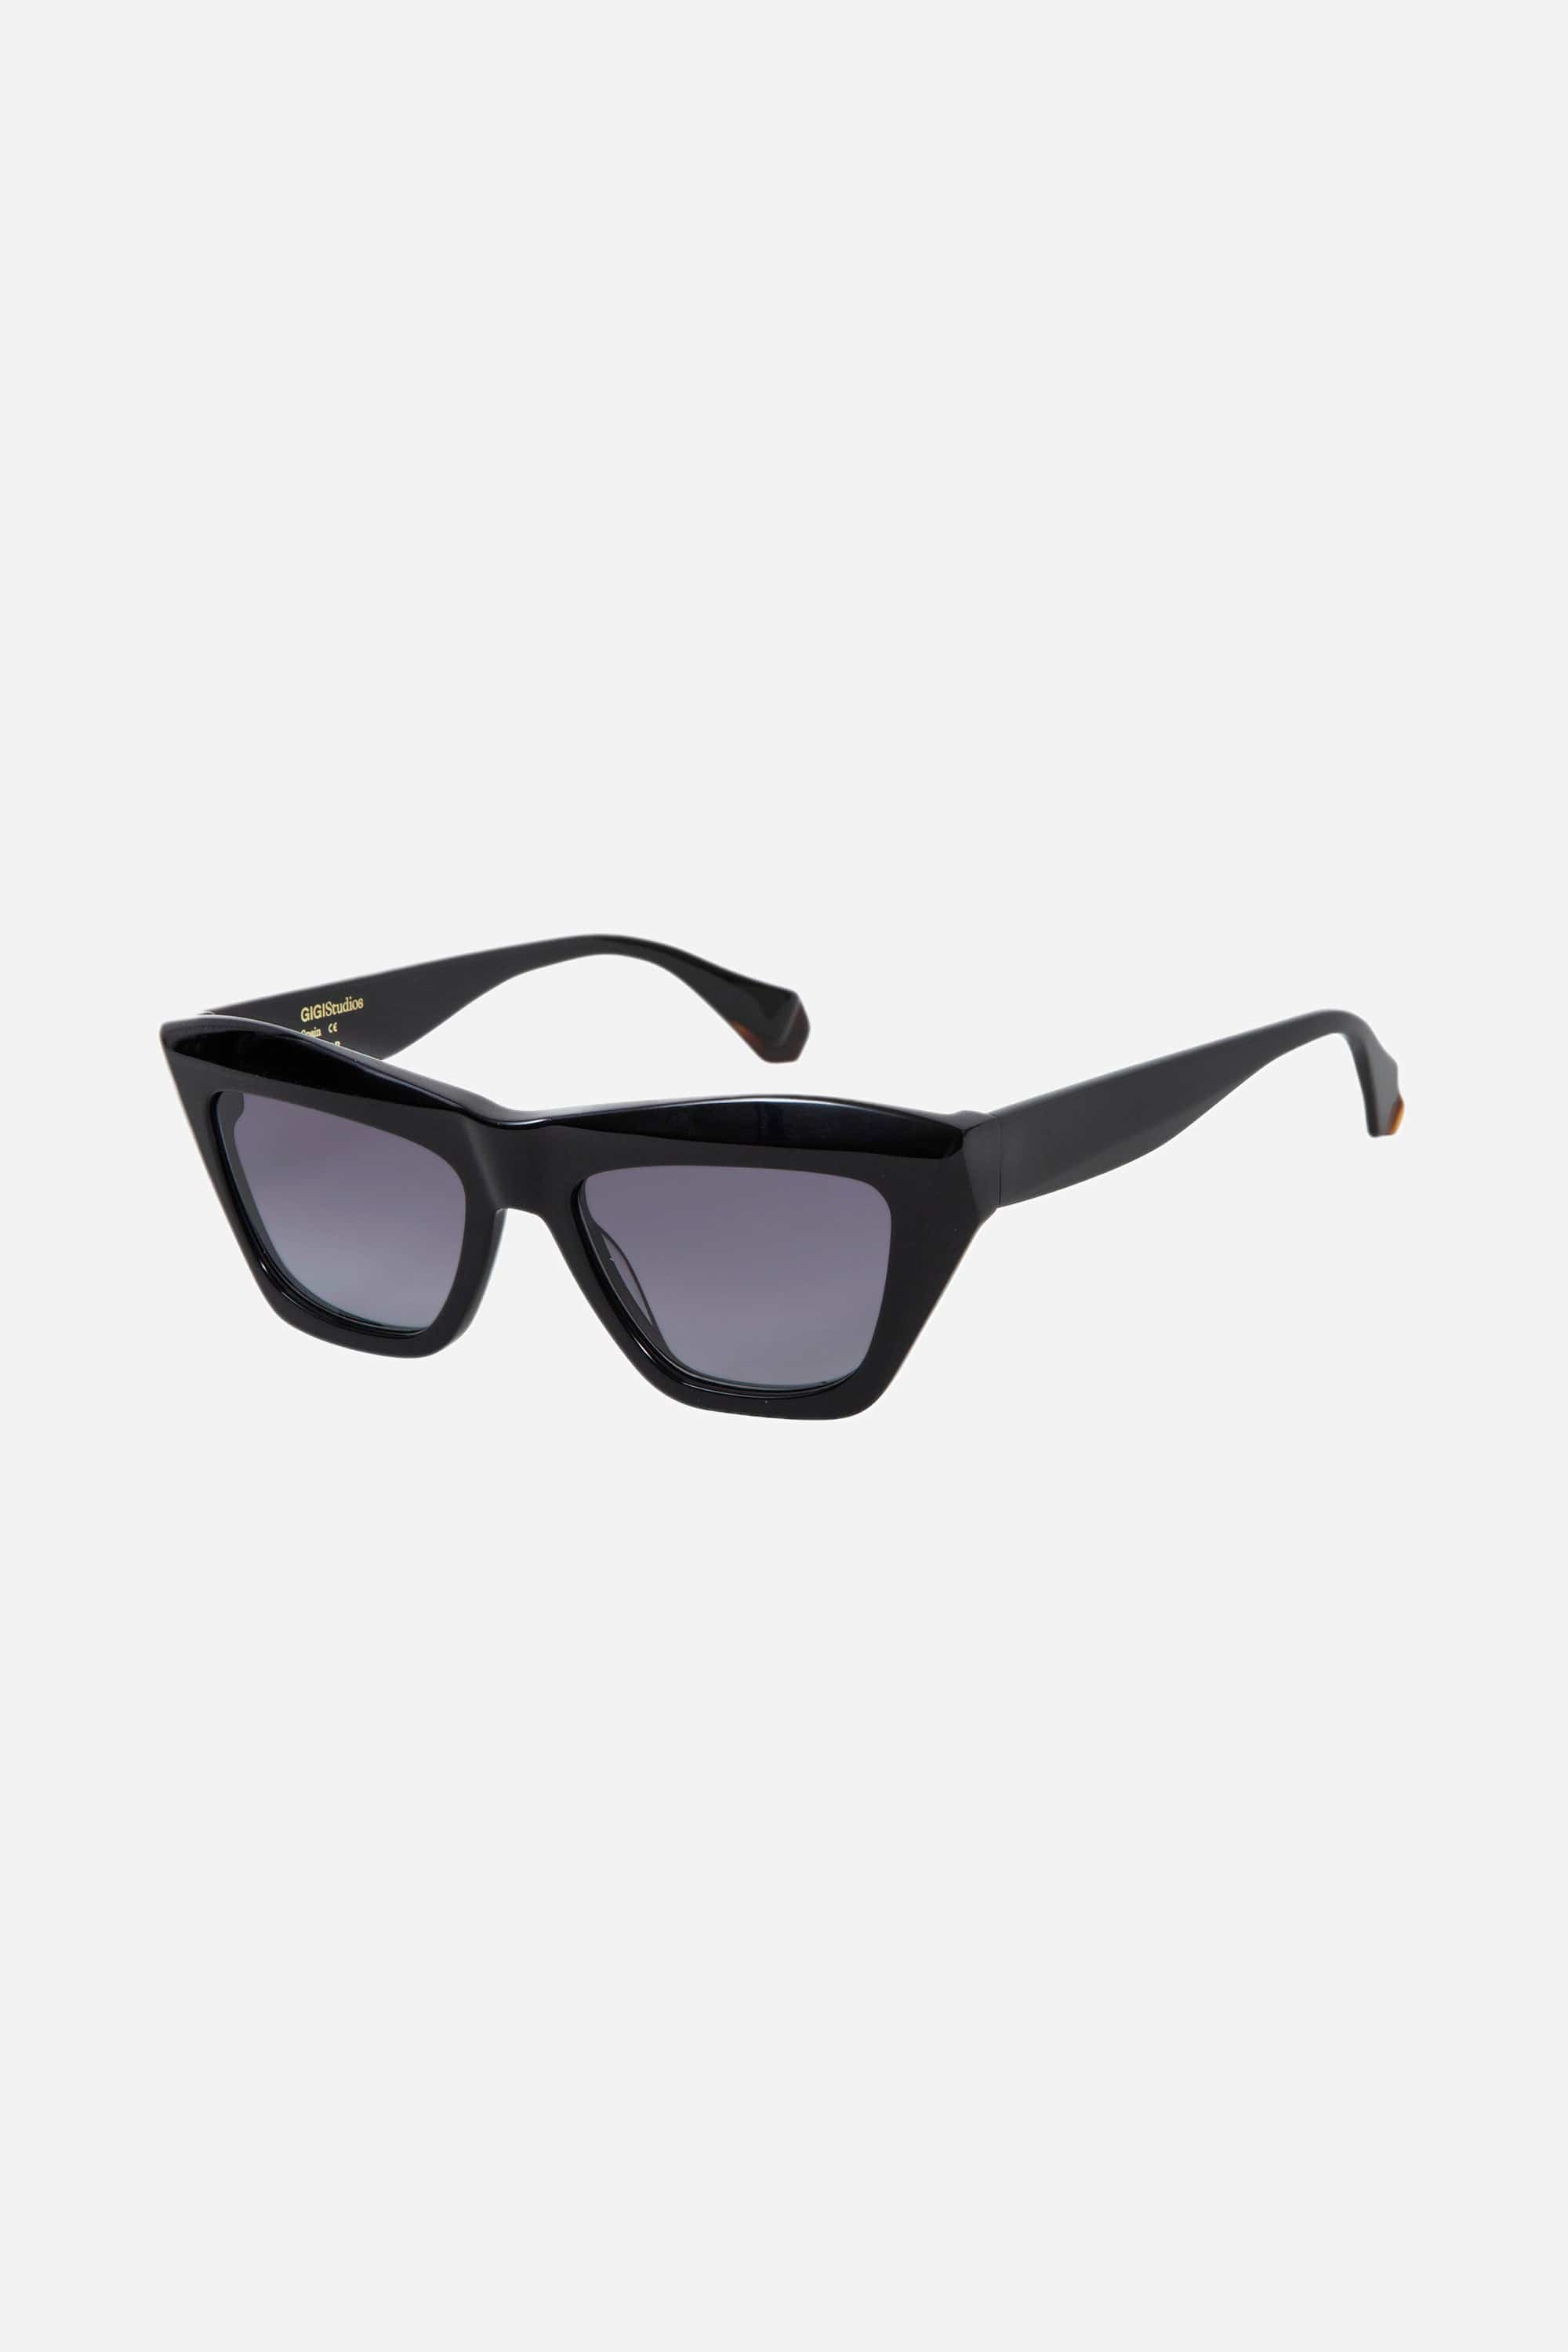 Gigi Studios cat-eye black bold sunglasses - Eyewear Club